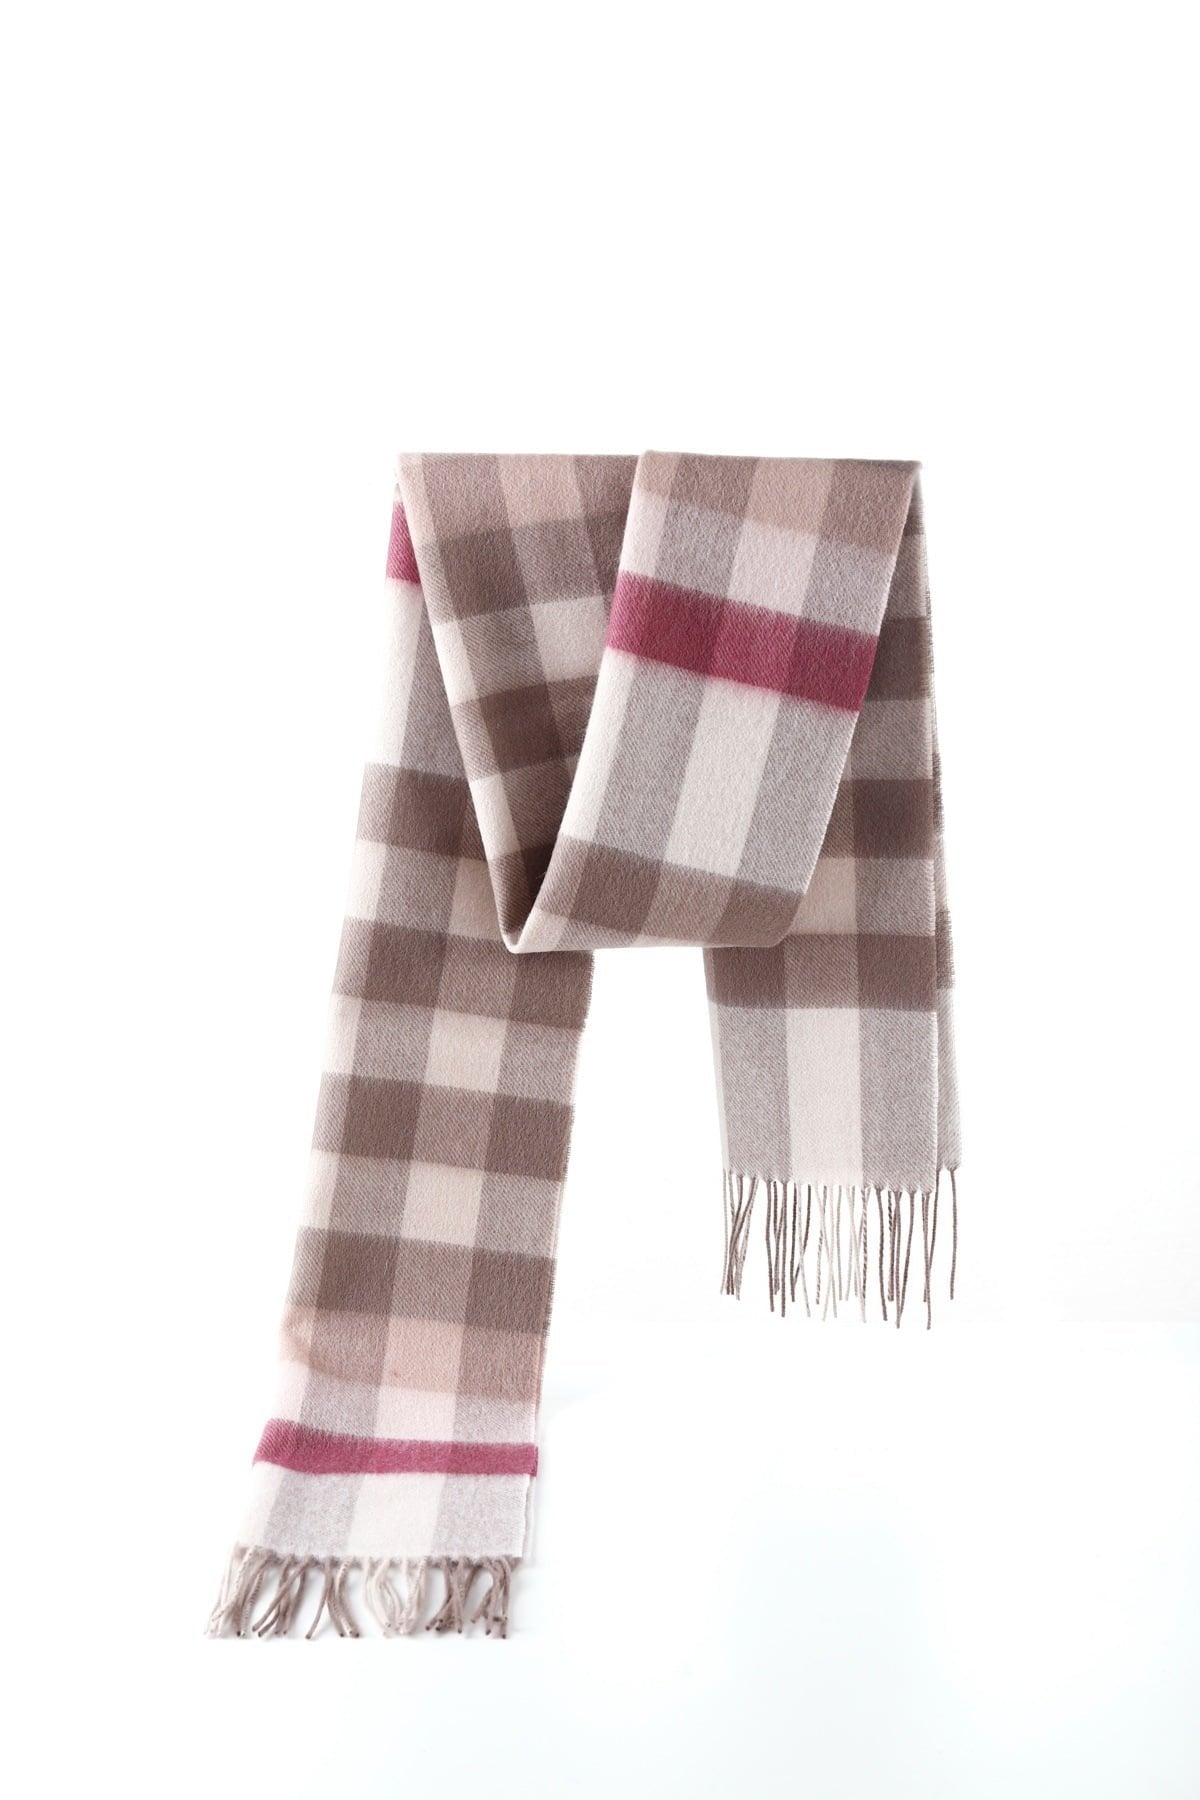 Scarf  100% Pure wool Scottish Design Pink Check